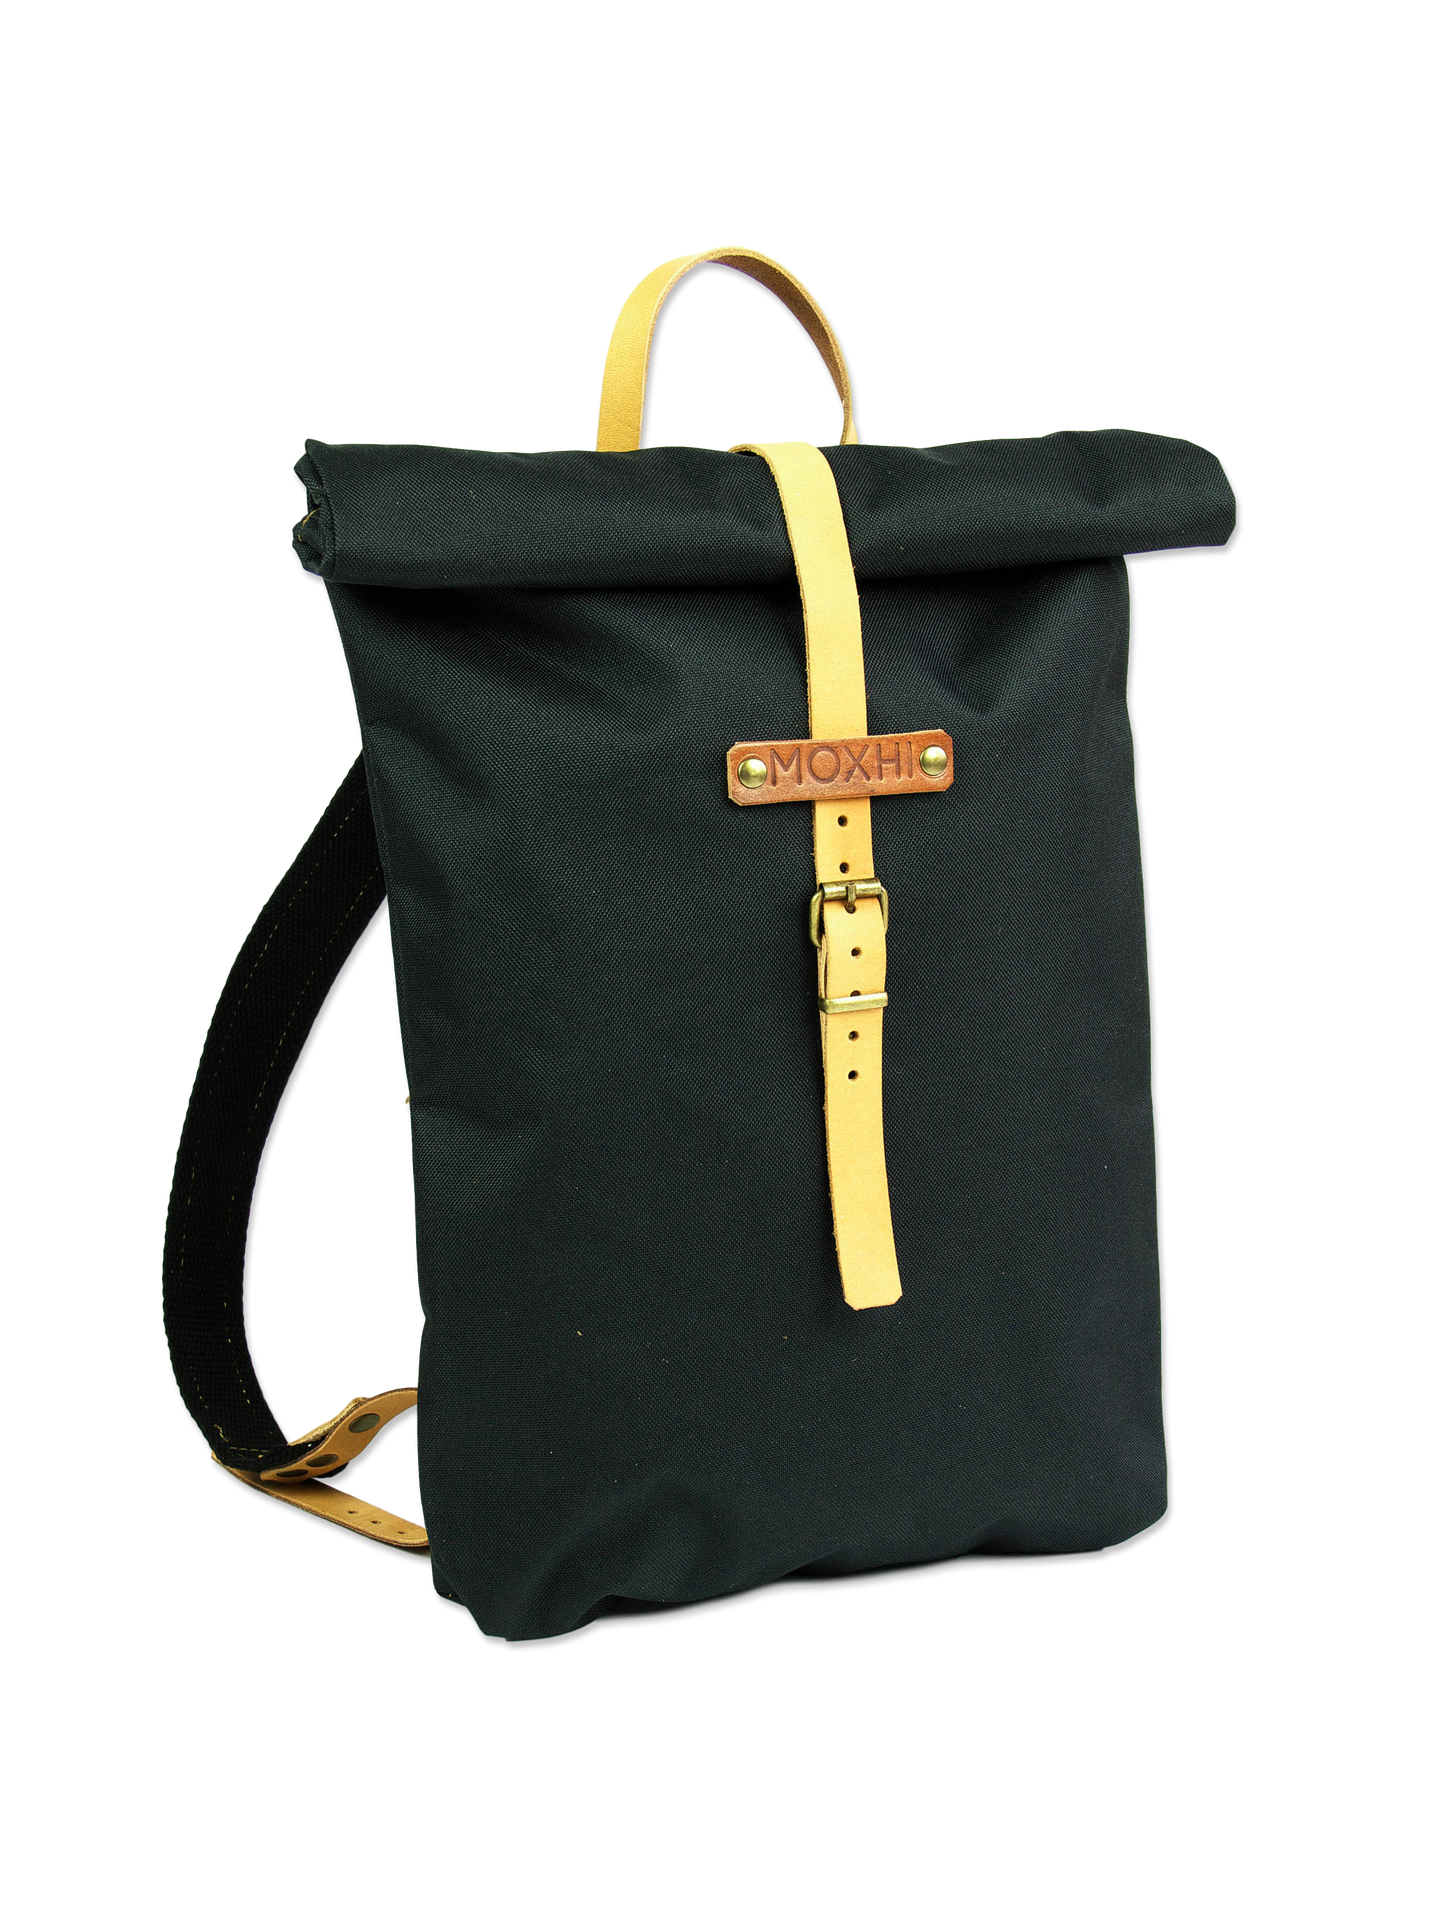 Black rolltop backpack handcrafted